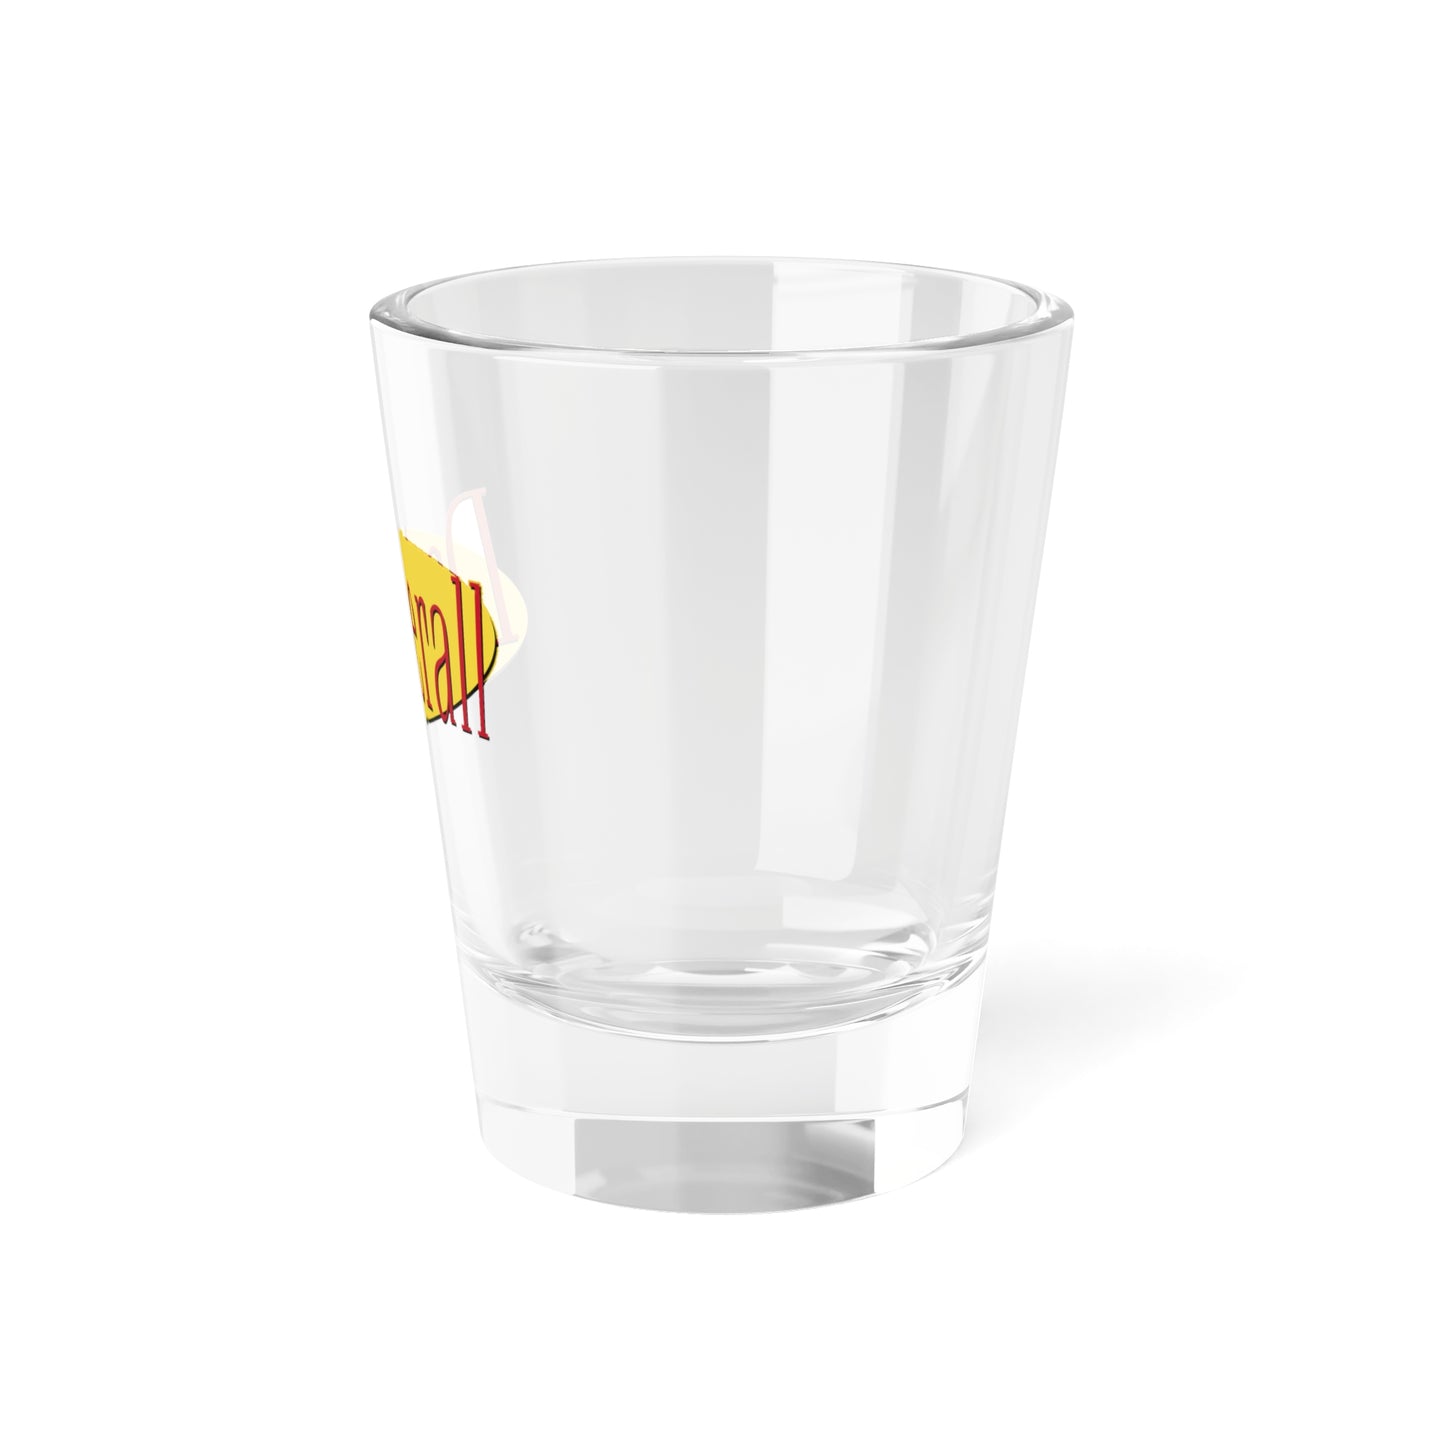 Daddfeld Shot Glass, 1.5oz